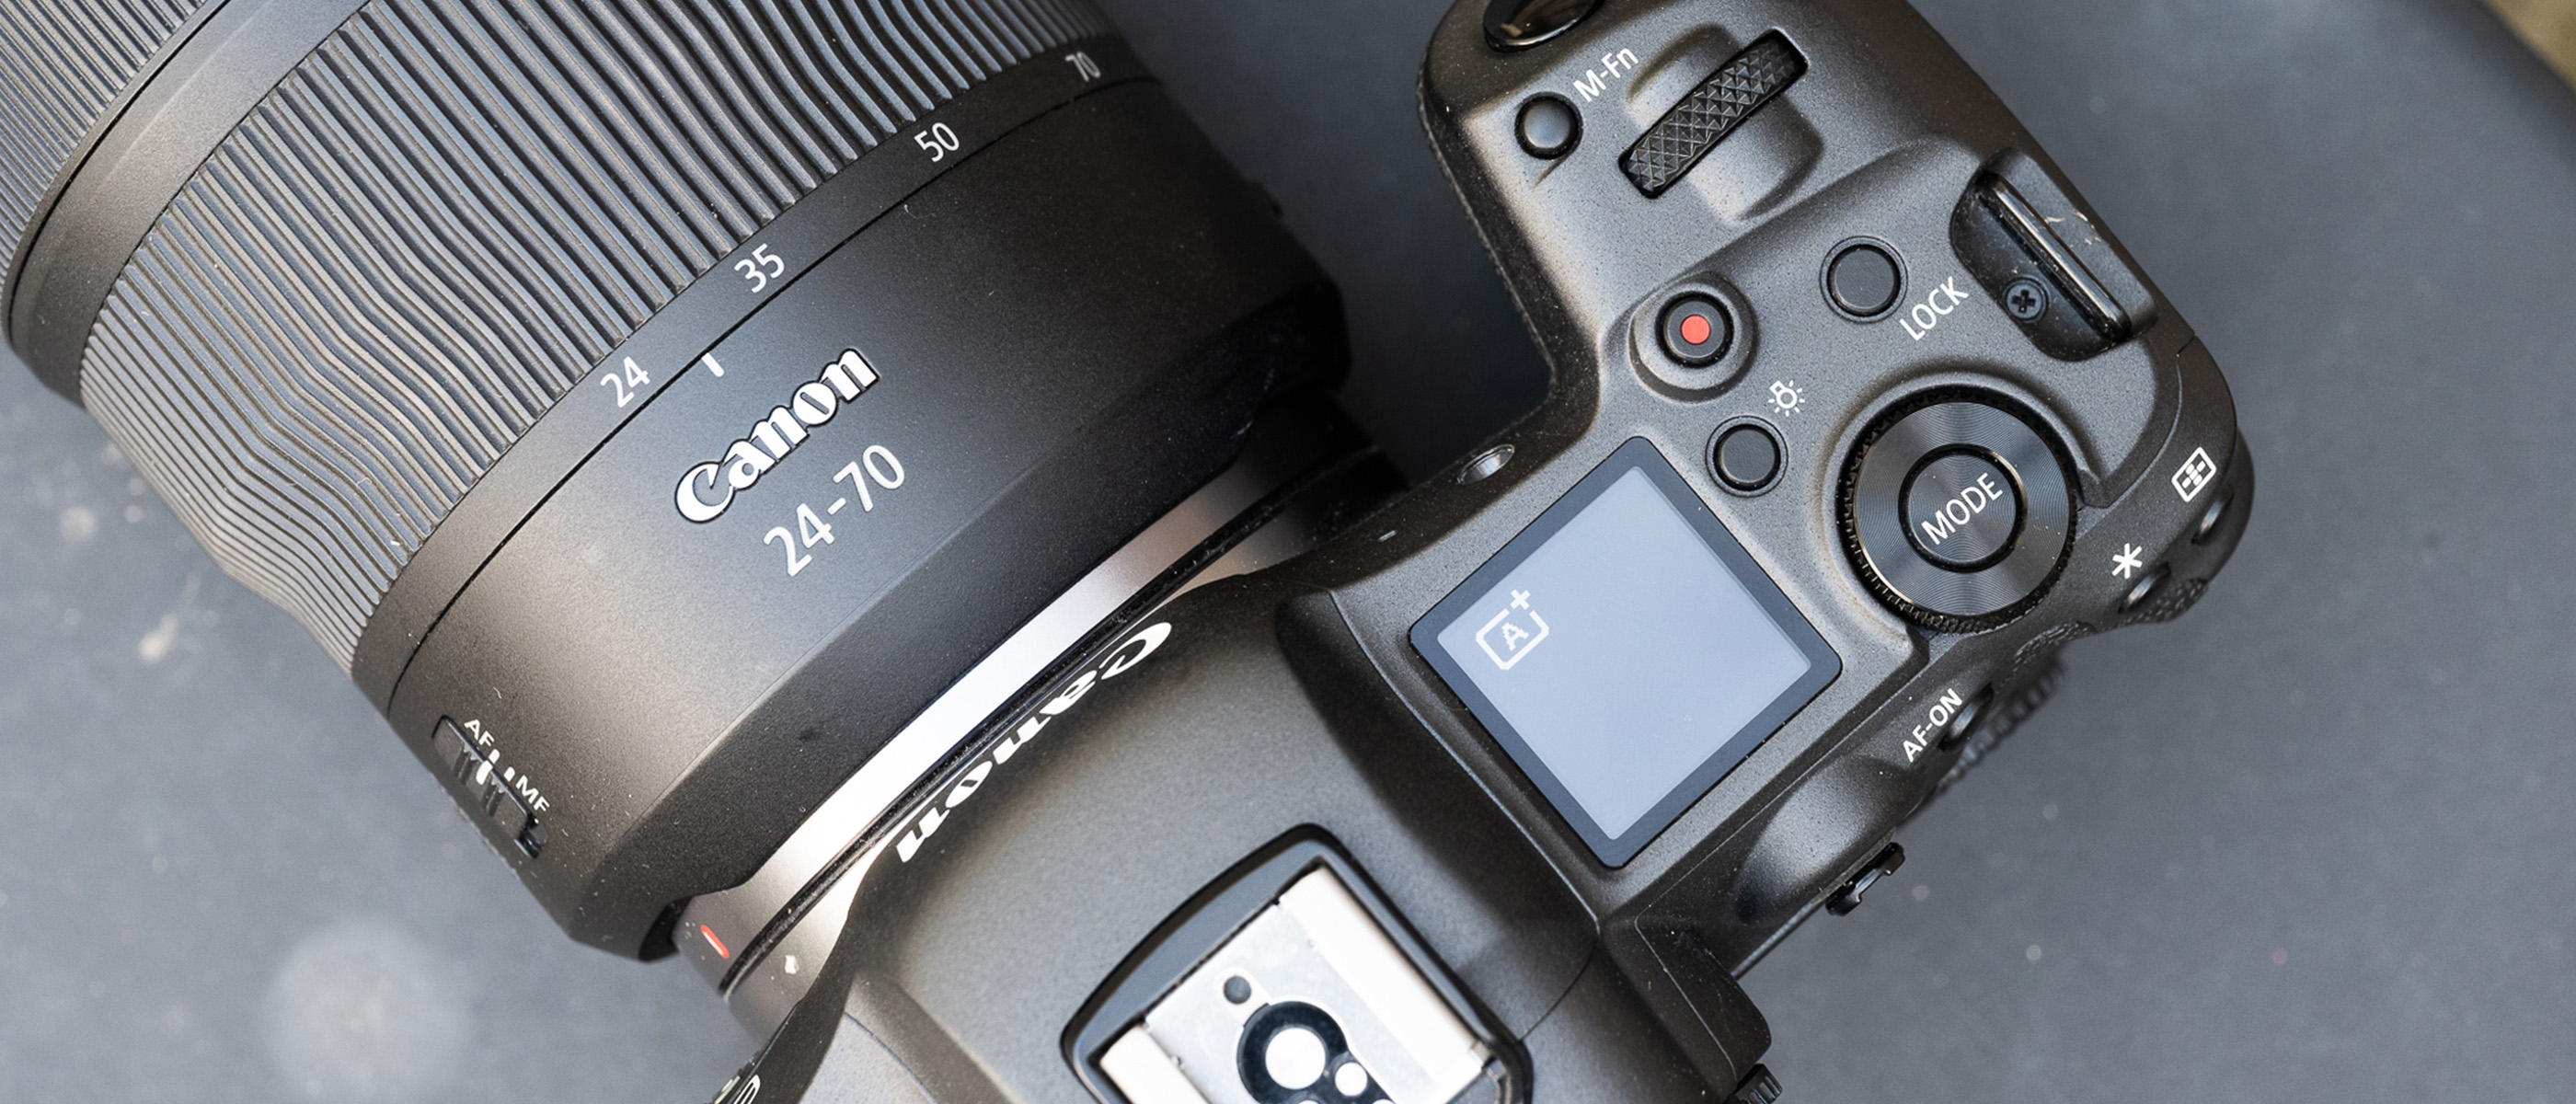 Canon EOS R5 Mirrorless Camera